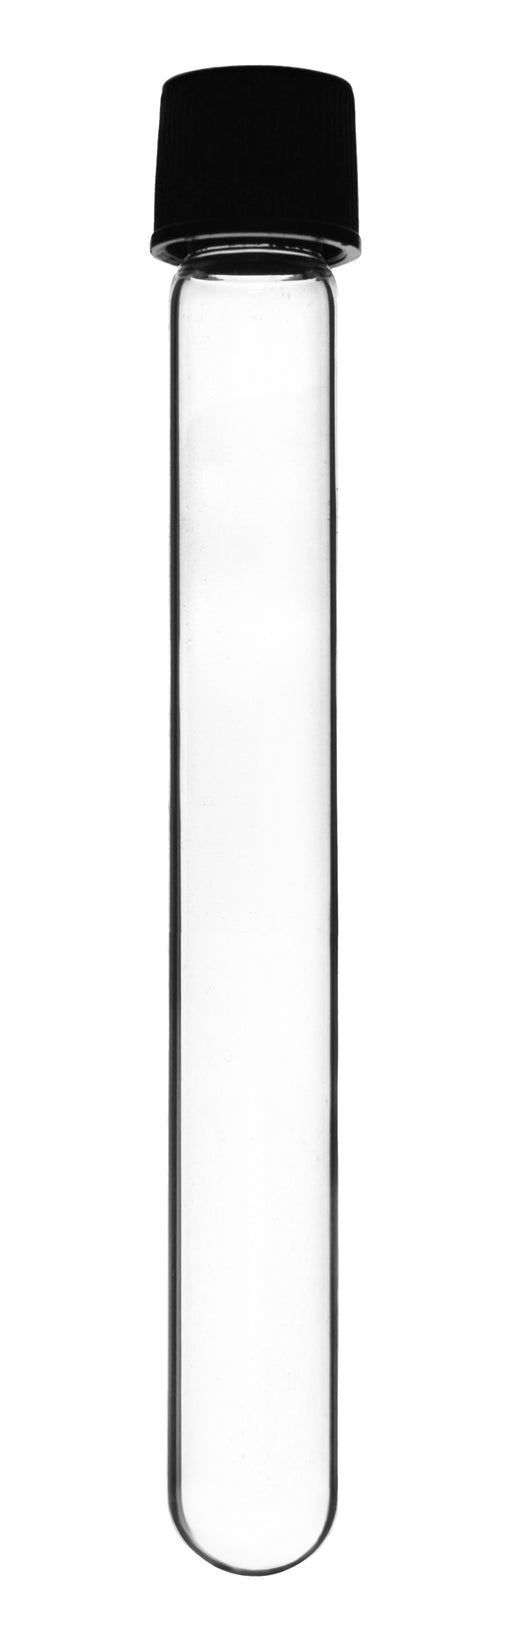 Culture Tube with Screw Cap, 15mL - 16x125mm - Round Bottom - Borosilicate Glass